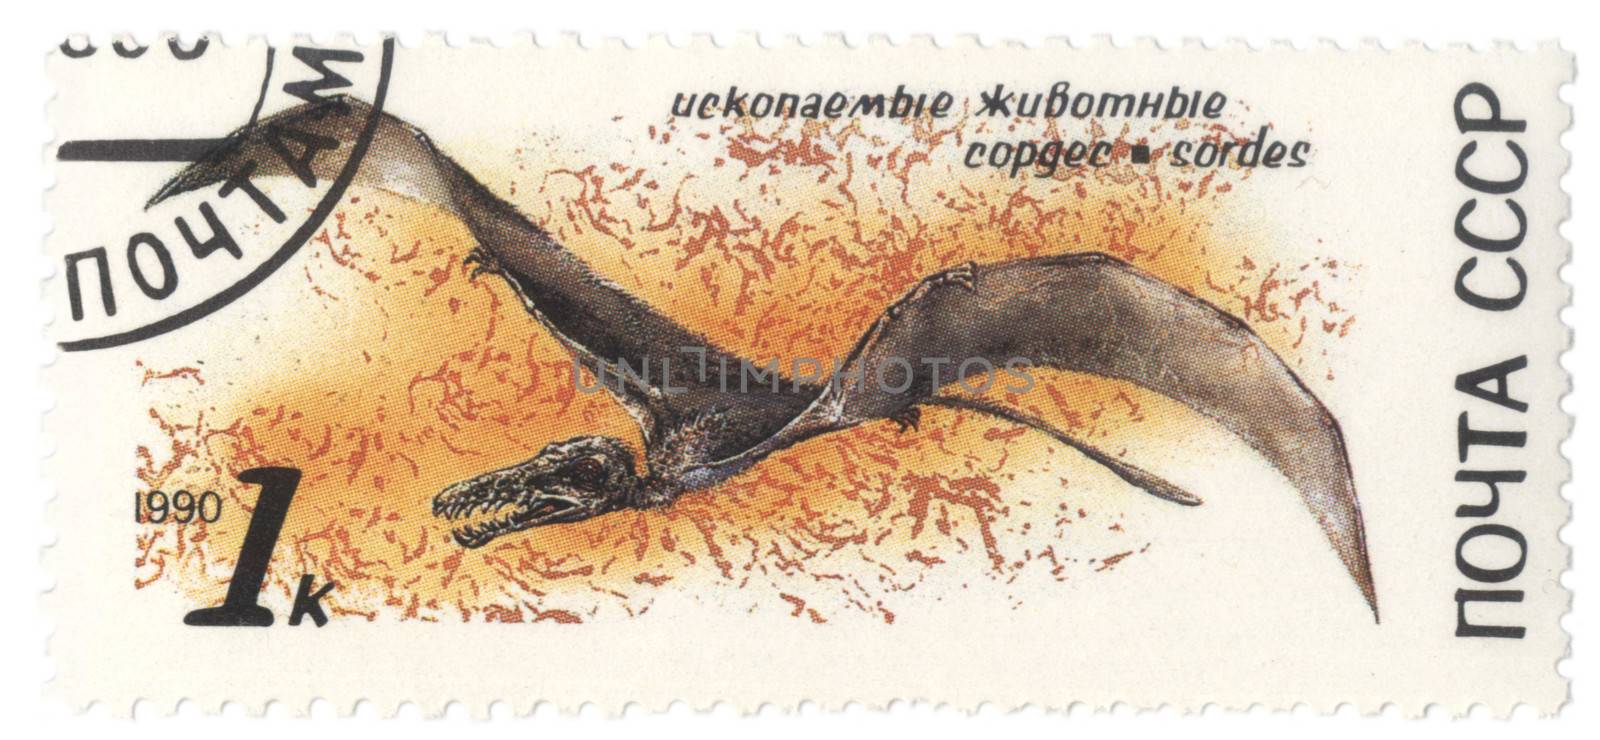 Dinosaur Sordes on post stamp by wander